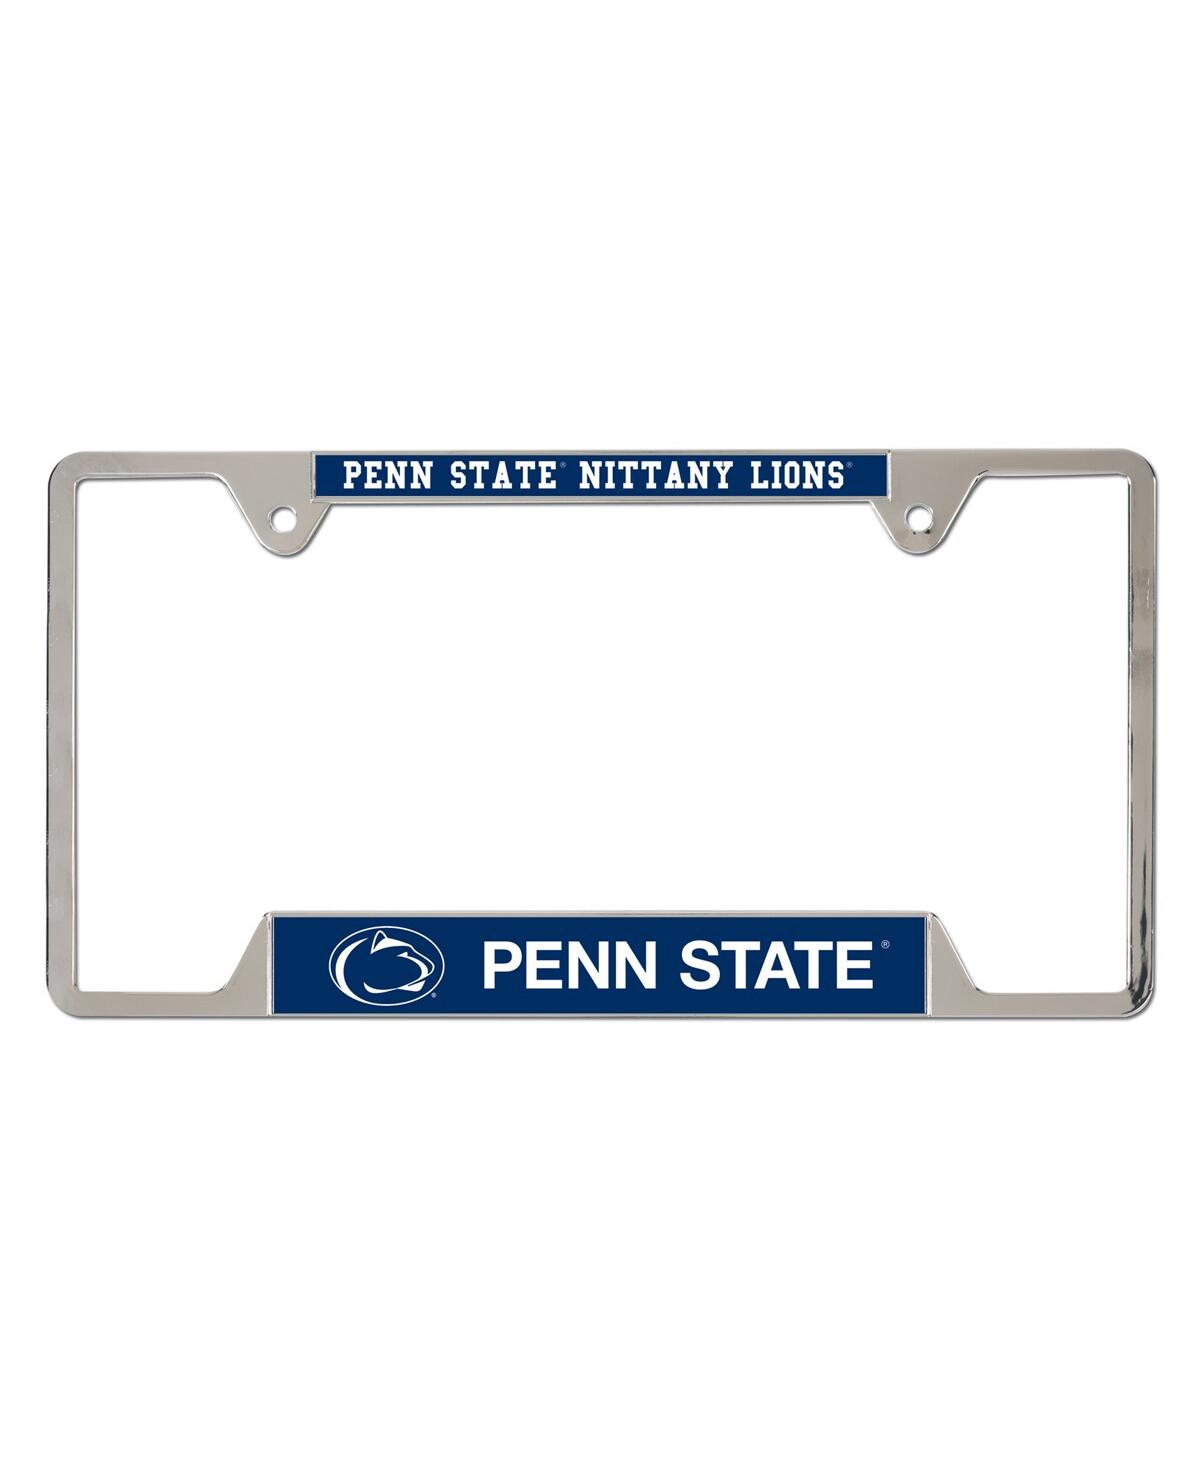 Penn State Nittany Lions License Plate Frame - Multi